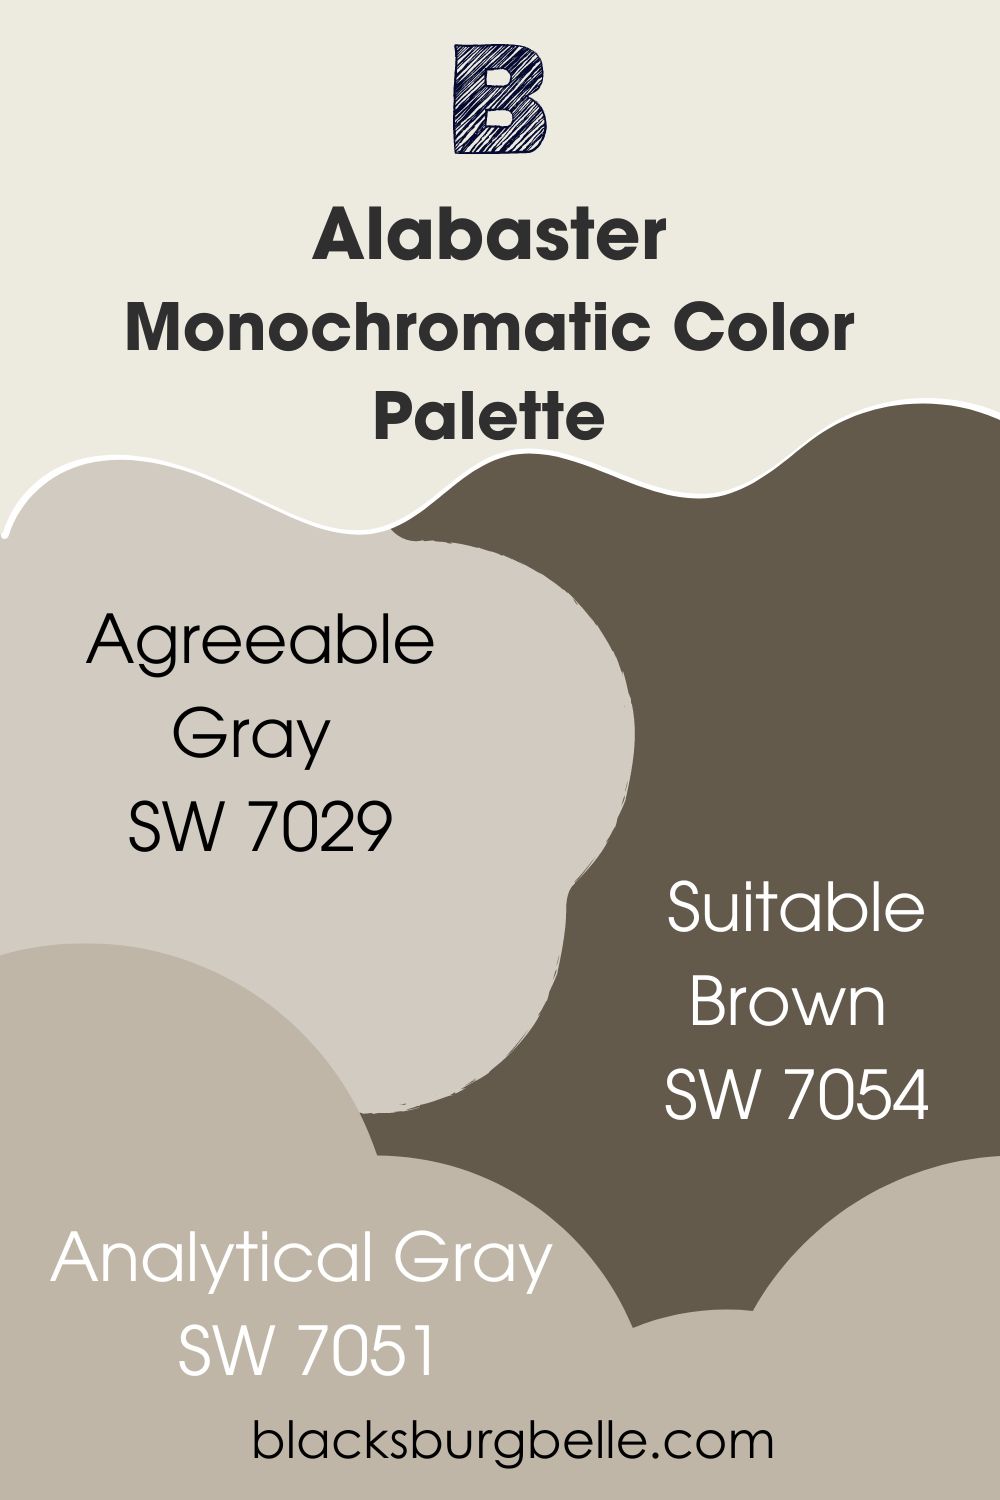 Alabaster Monochromatic Color Palette